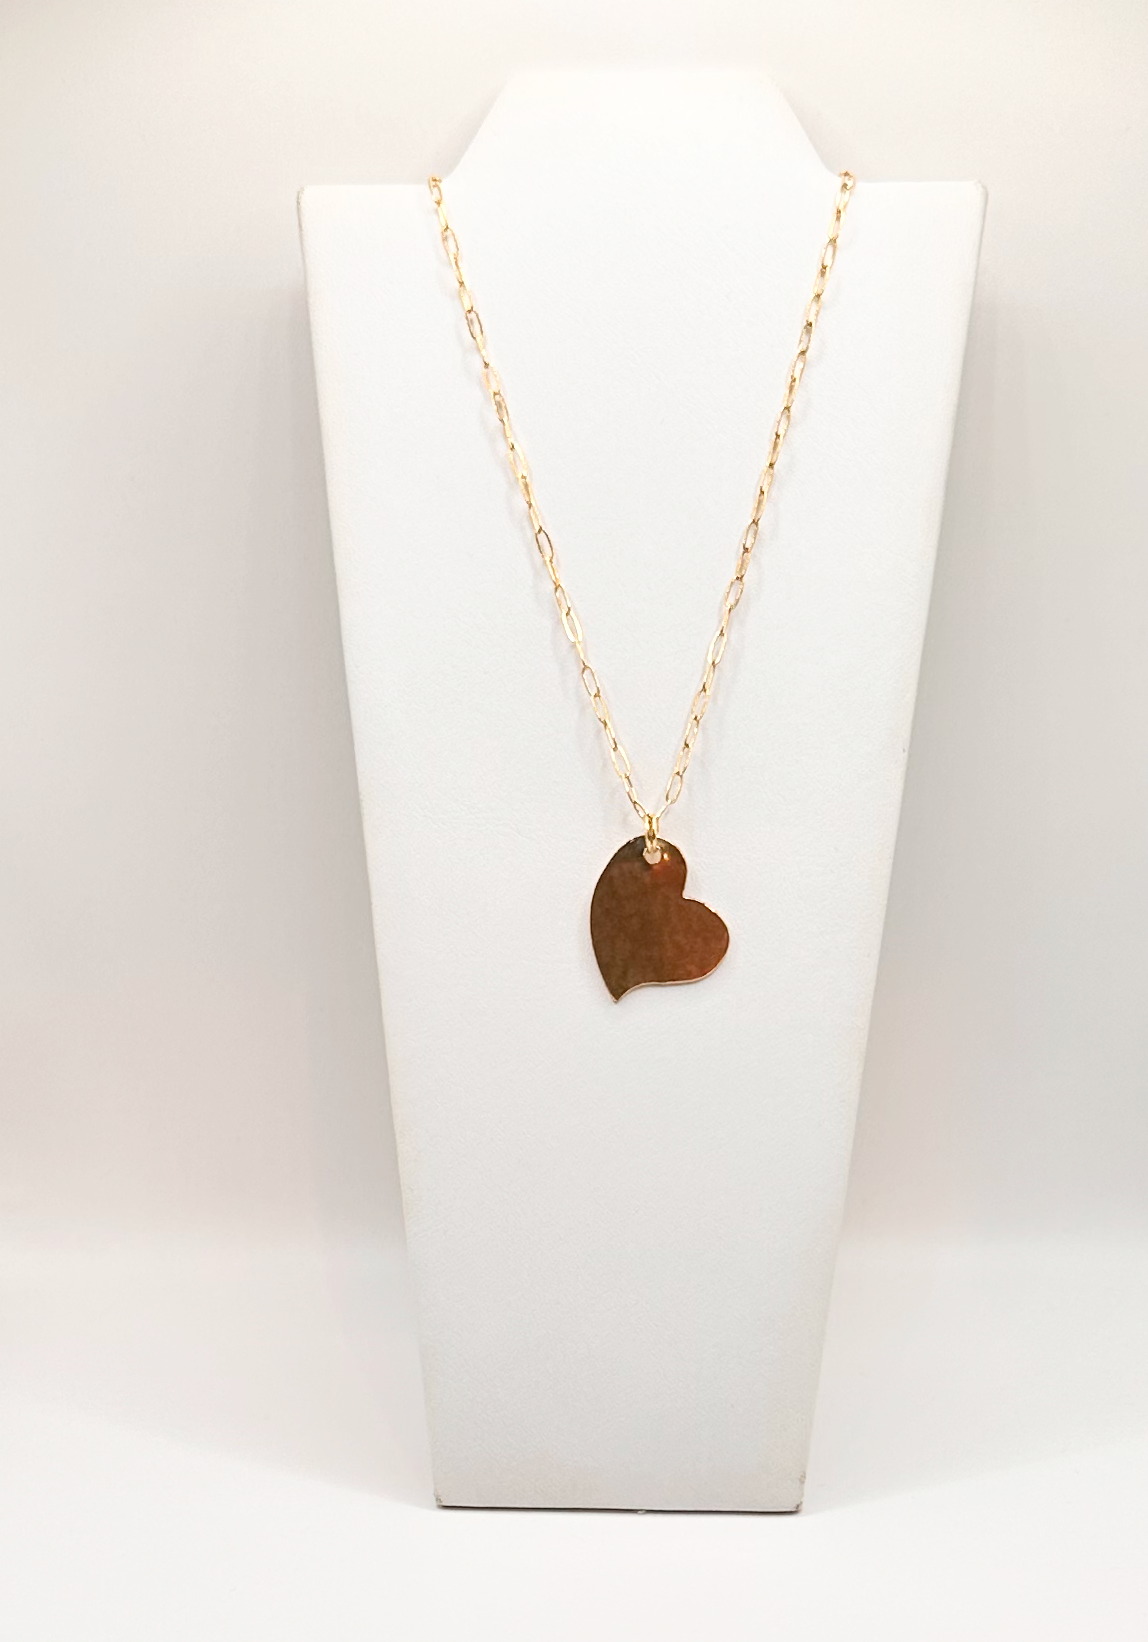 14KT Gold Filled Heart Pendant Necklace